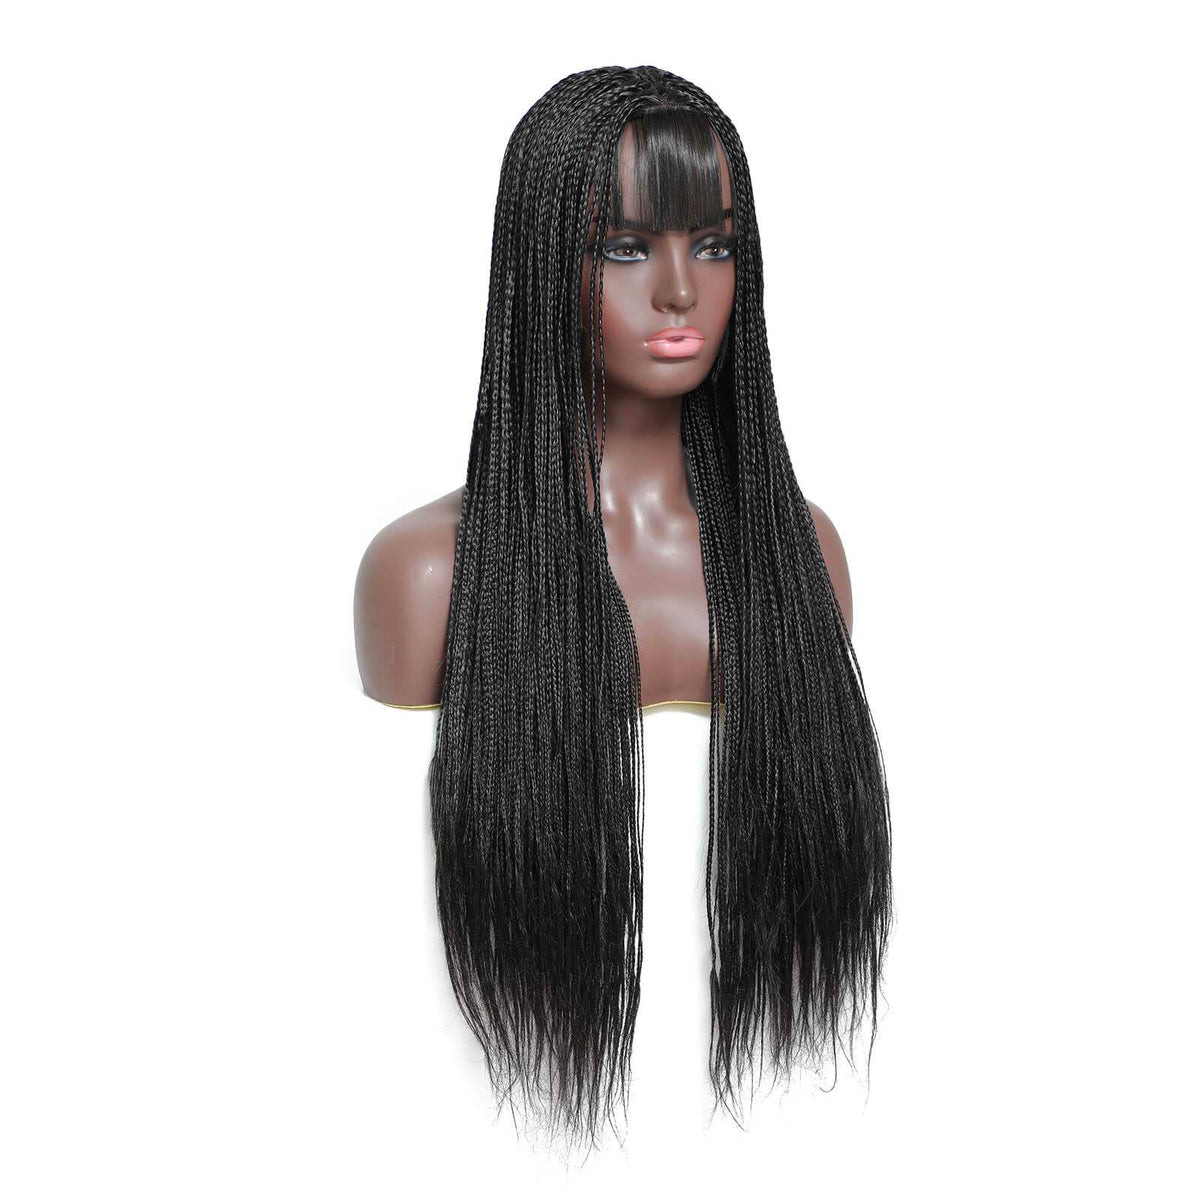 Black Box Braided Wigs for  Black Women Knotless Braids